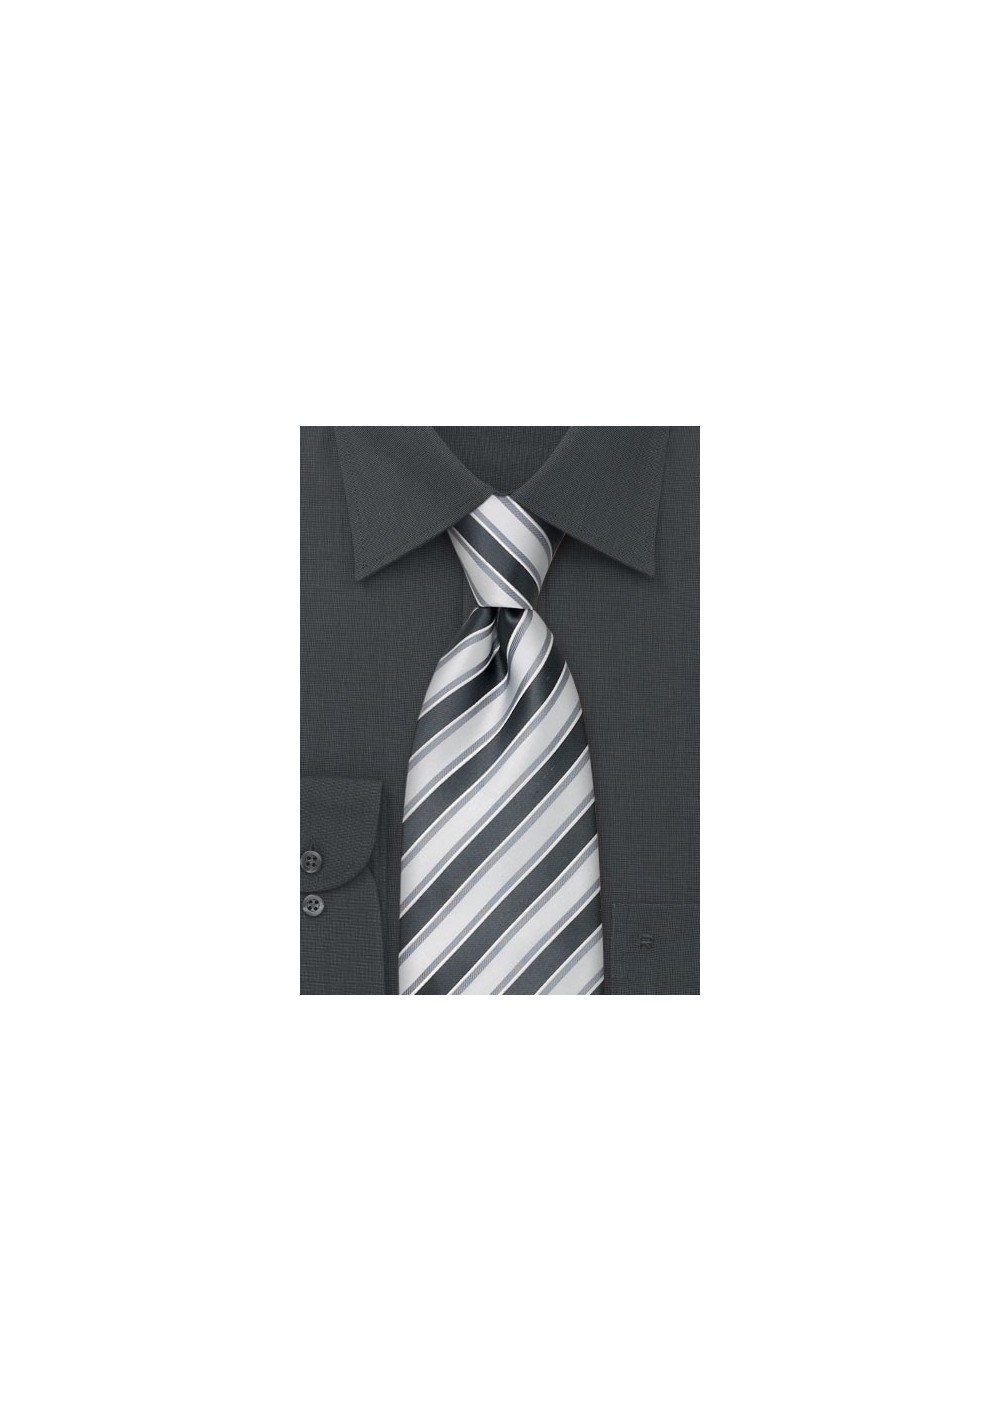 Formal Striped Ties - Striped Necktie "Verona" by Parsley